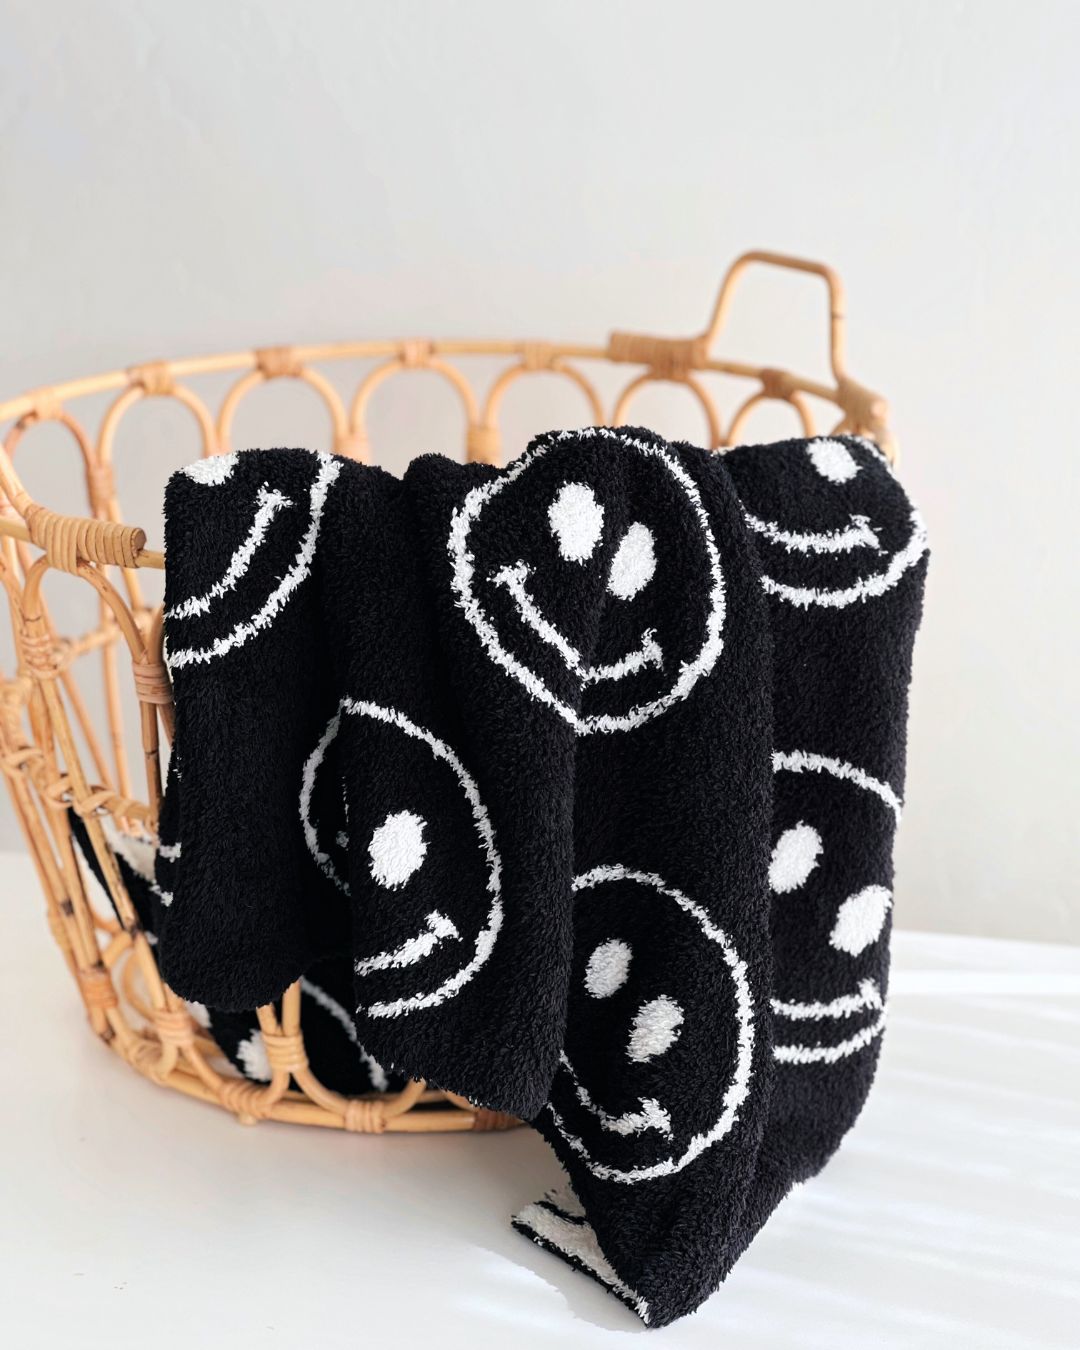 Smiley Fuzzy Blanket | Black